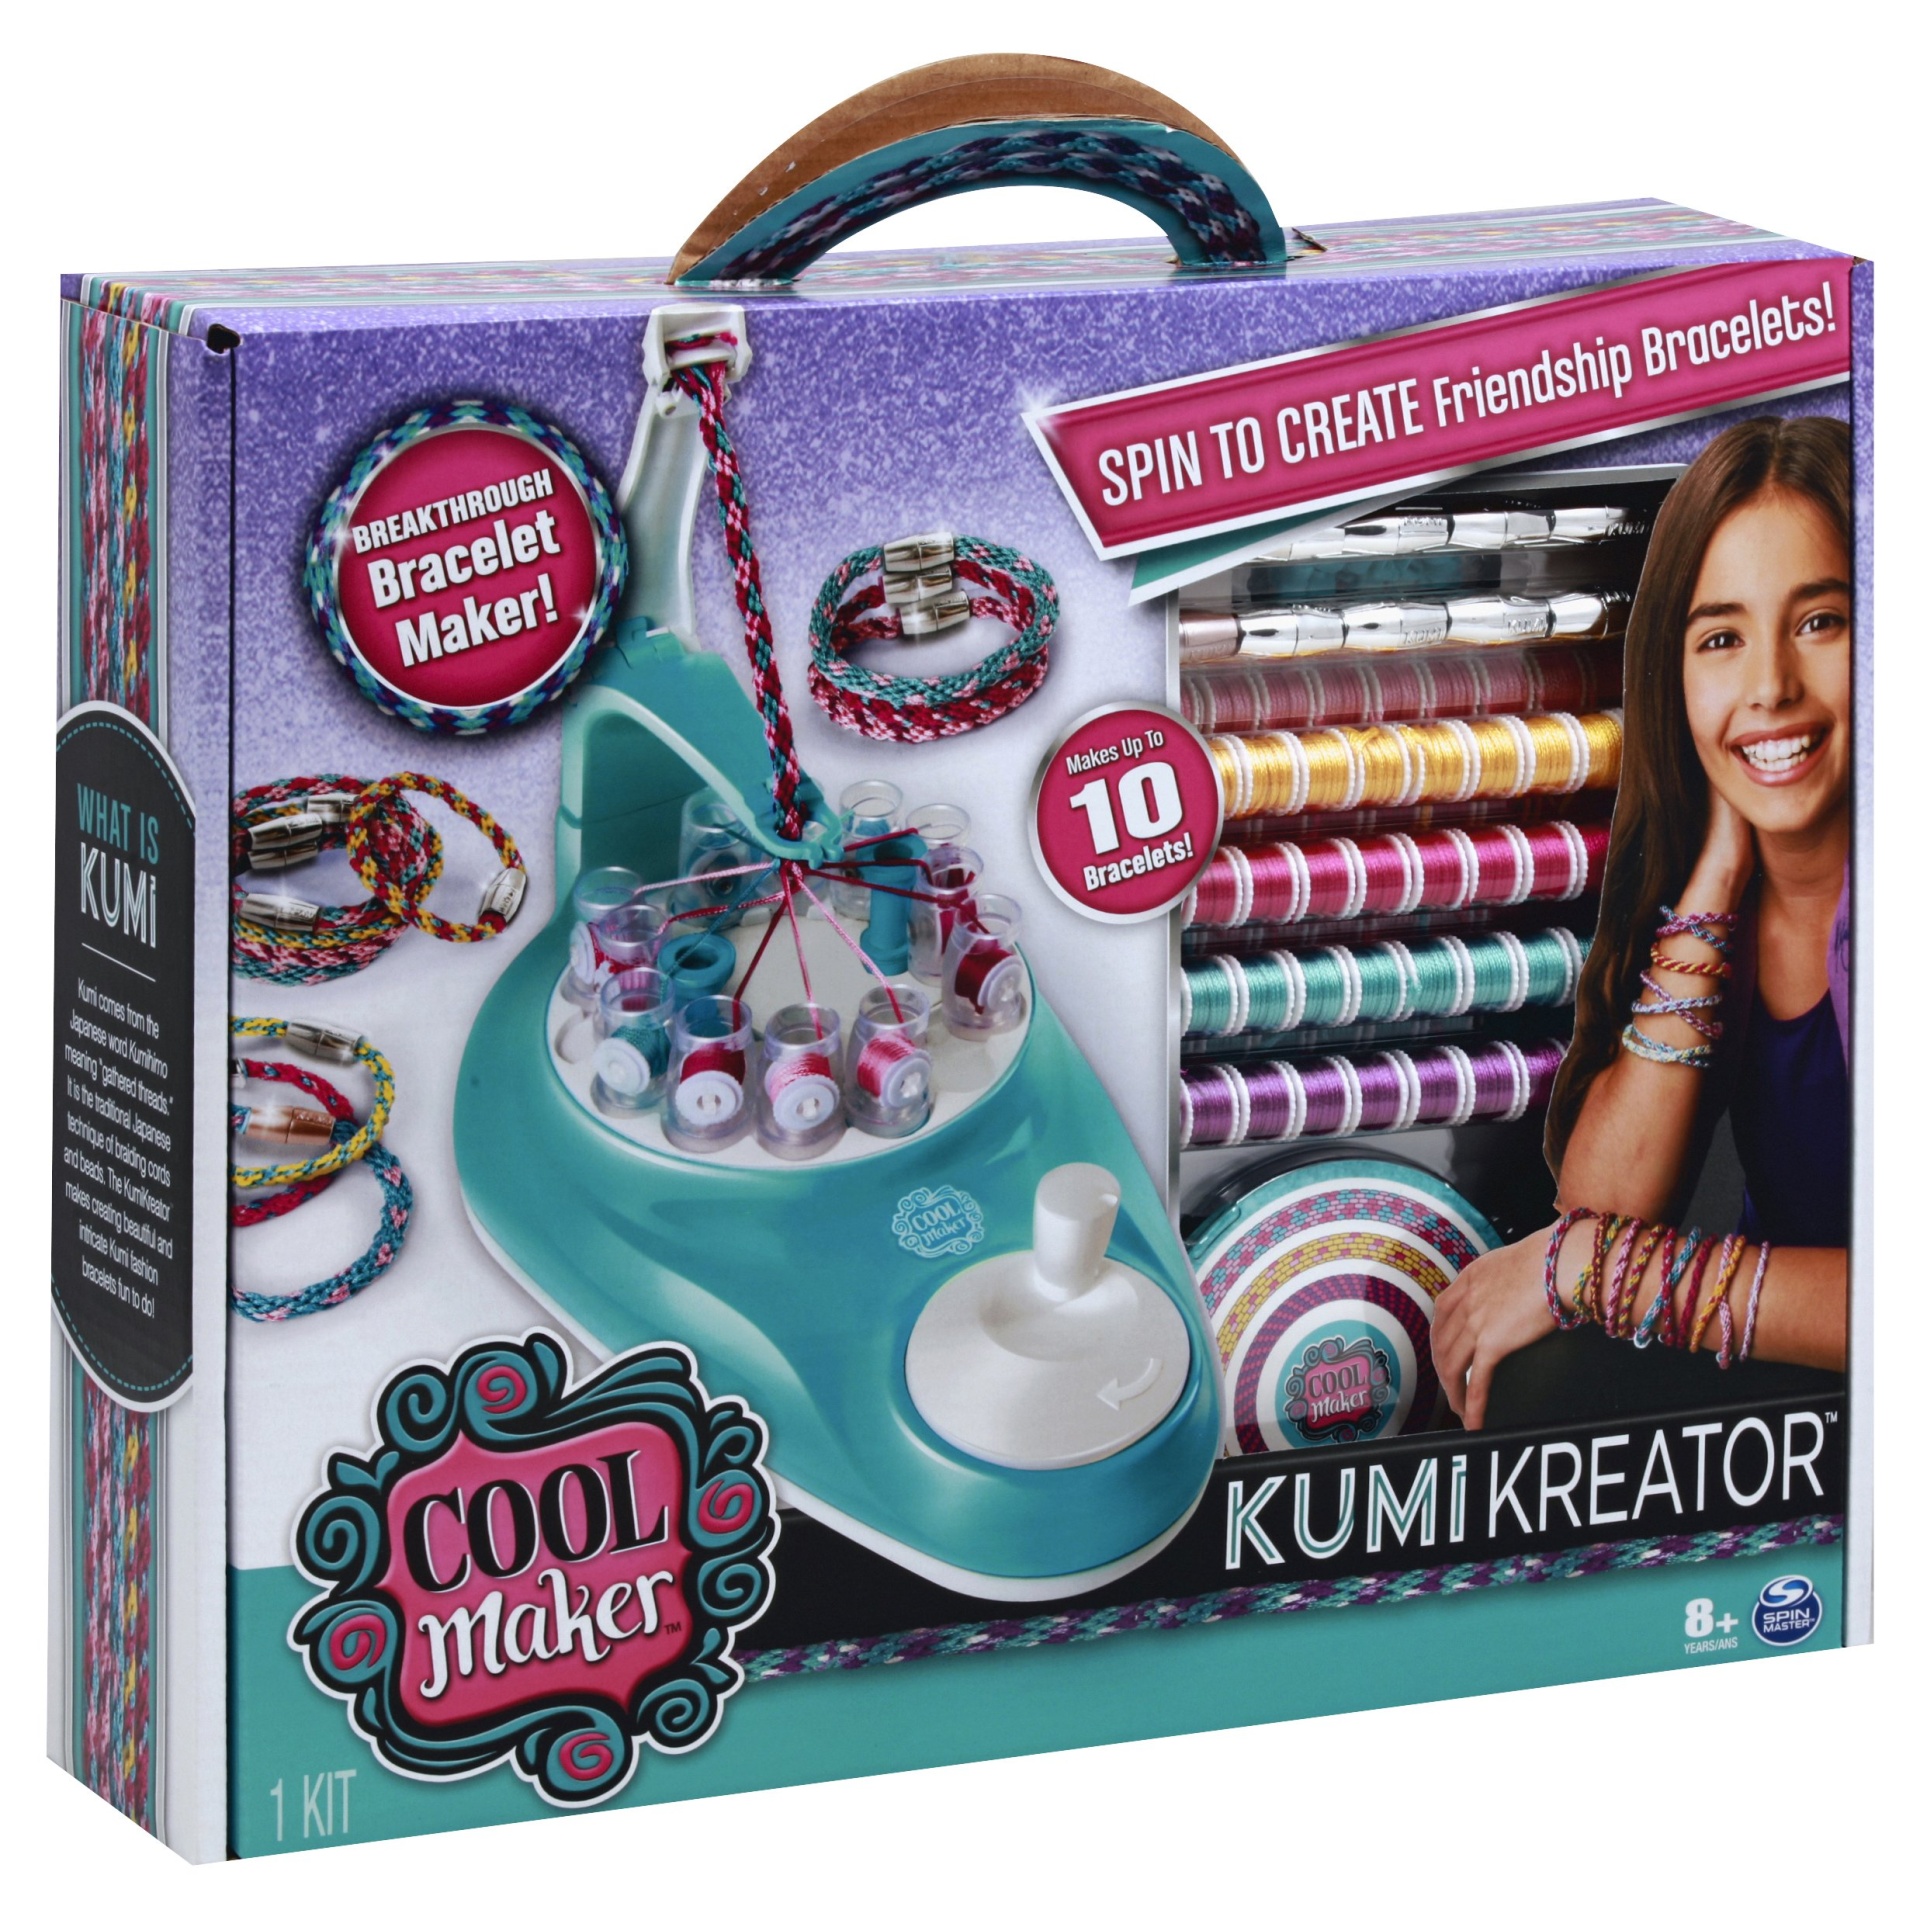 Kumi Kreator Cool Maker Review  Giveaway  MotherGeek